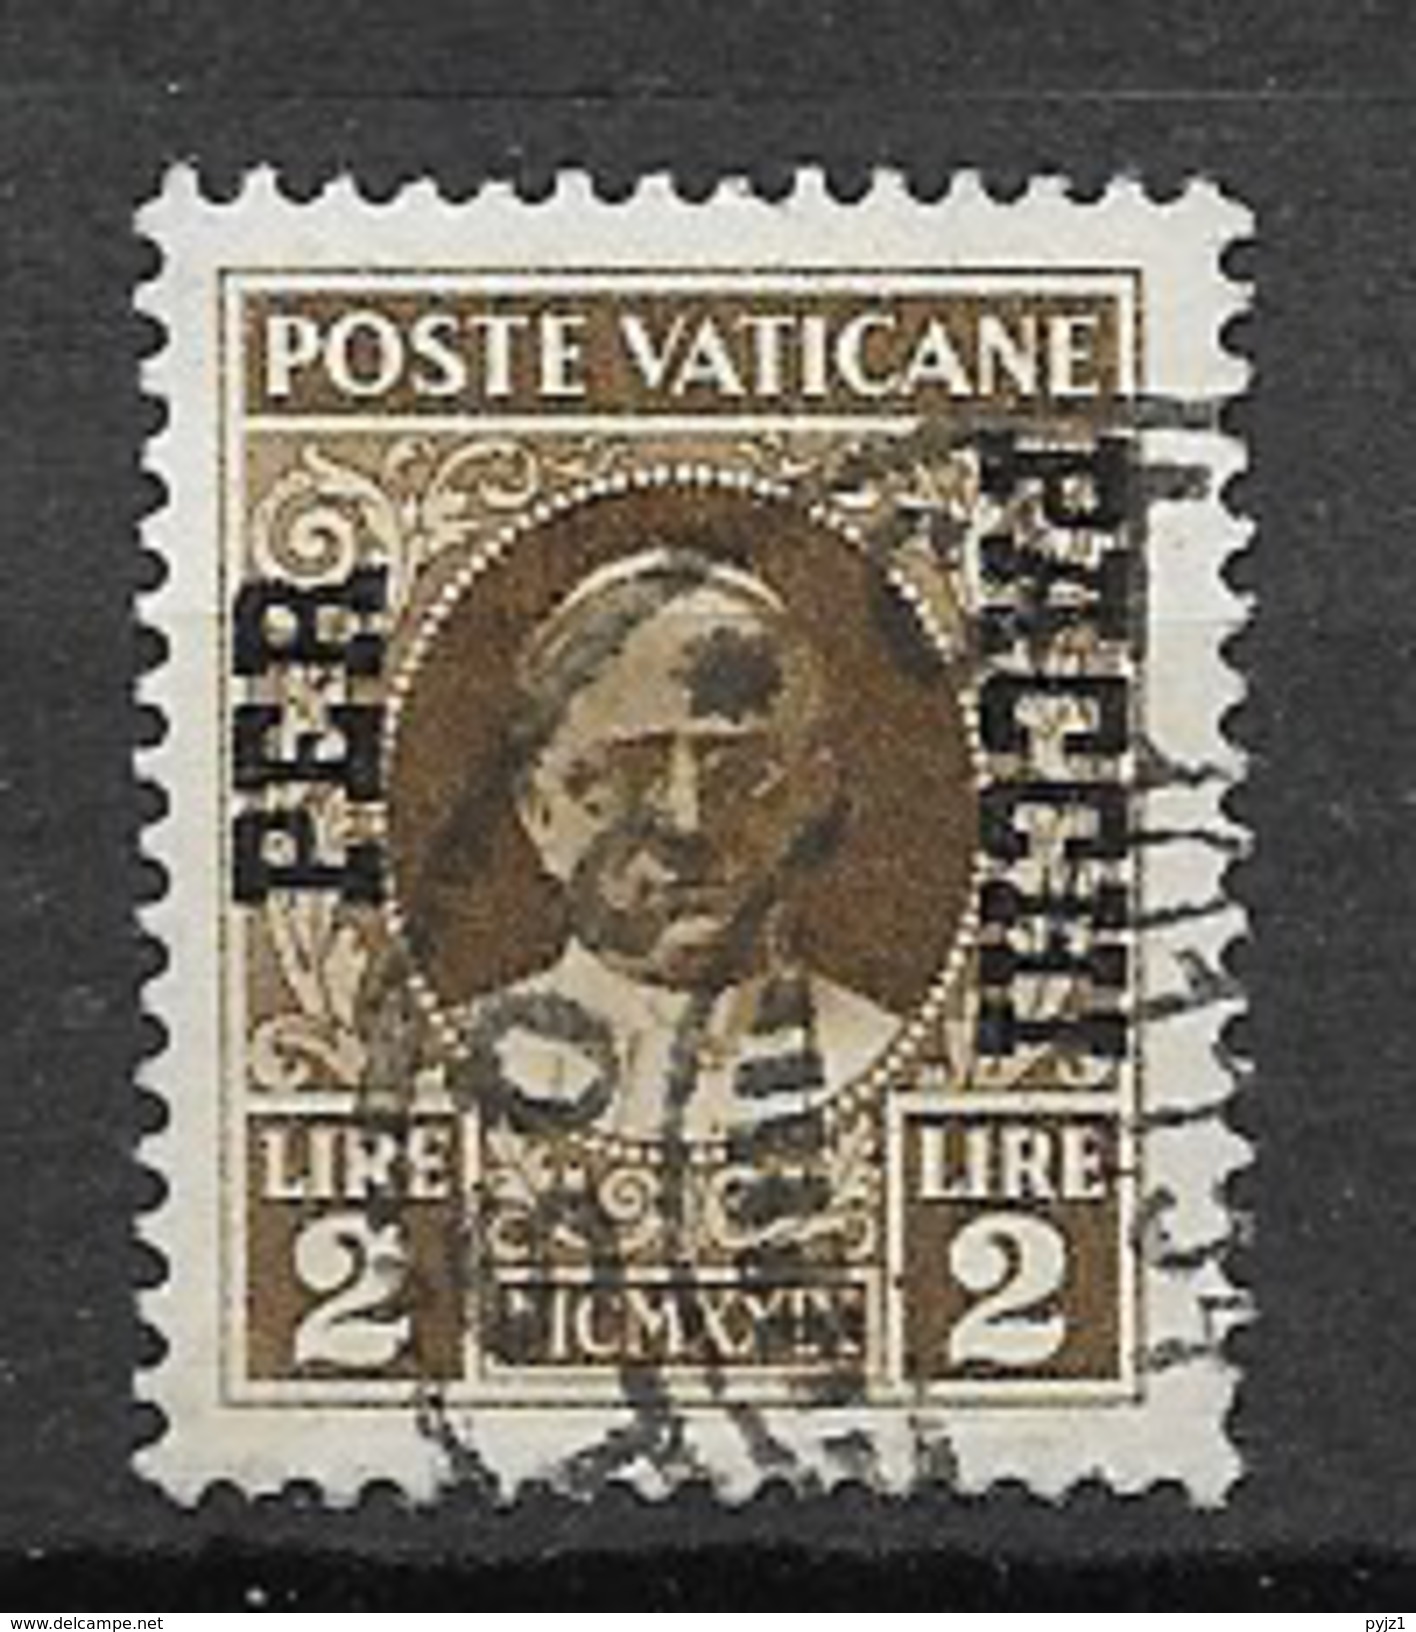 1931 USED Vaticano, Parcel - Paketmarken